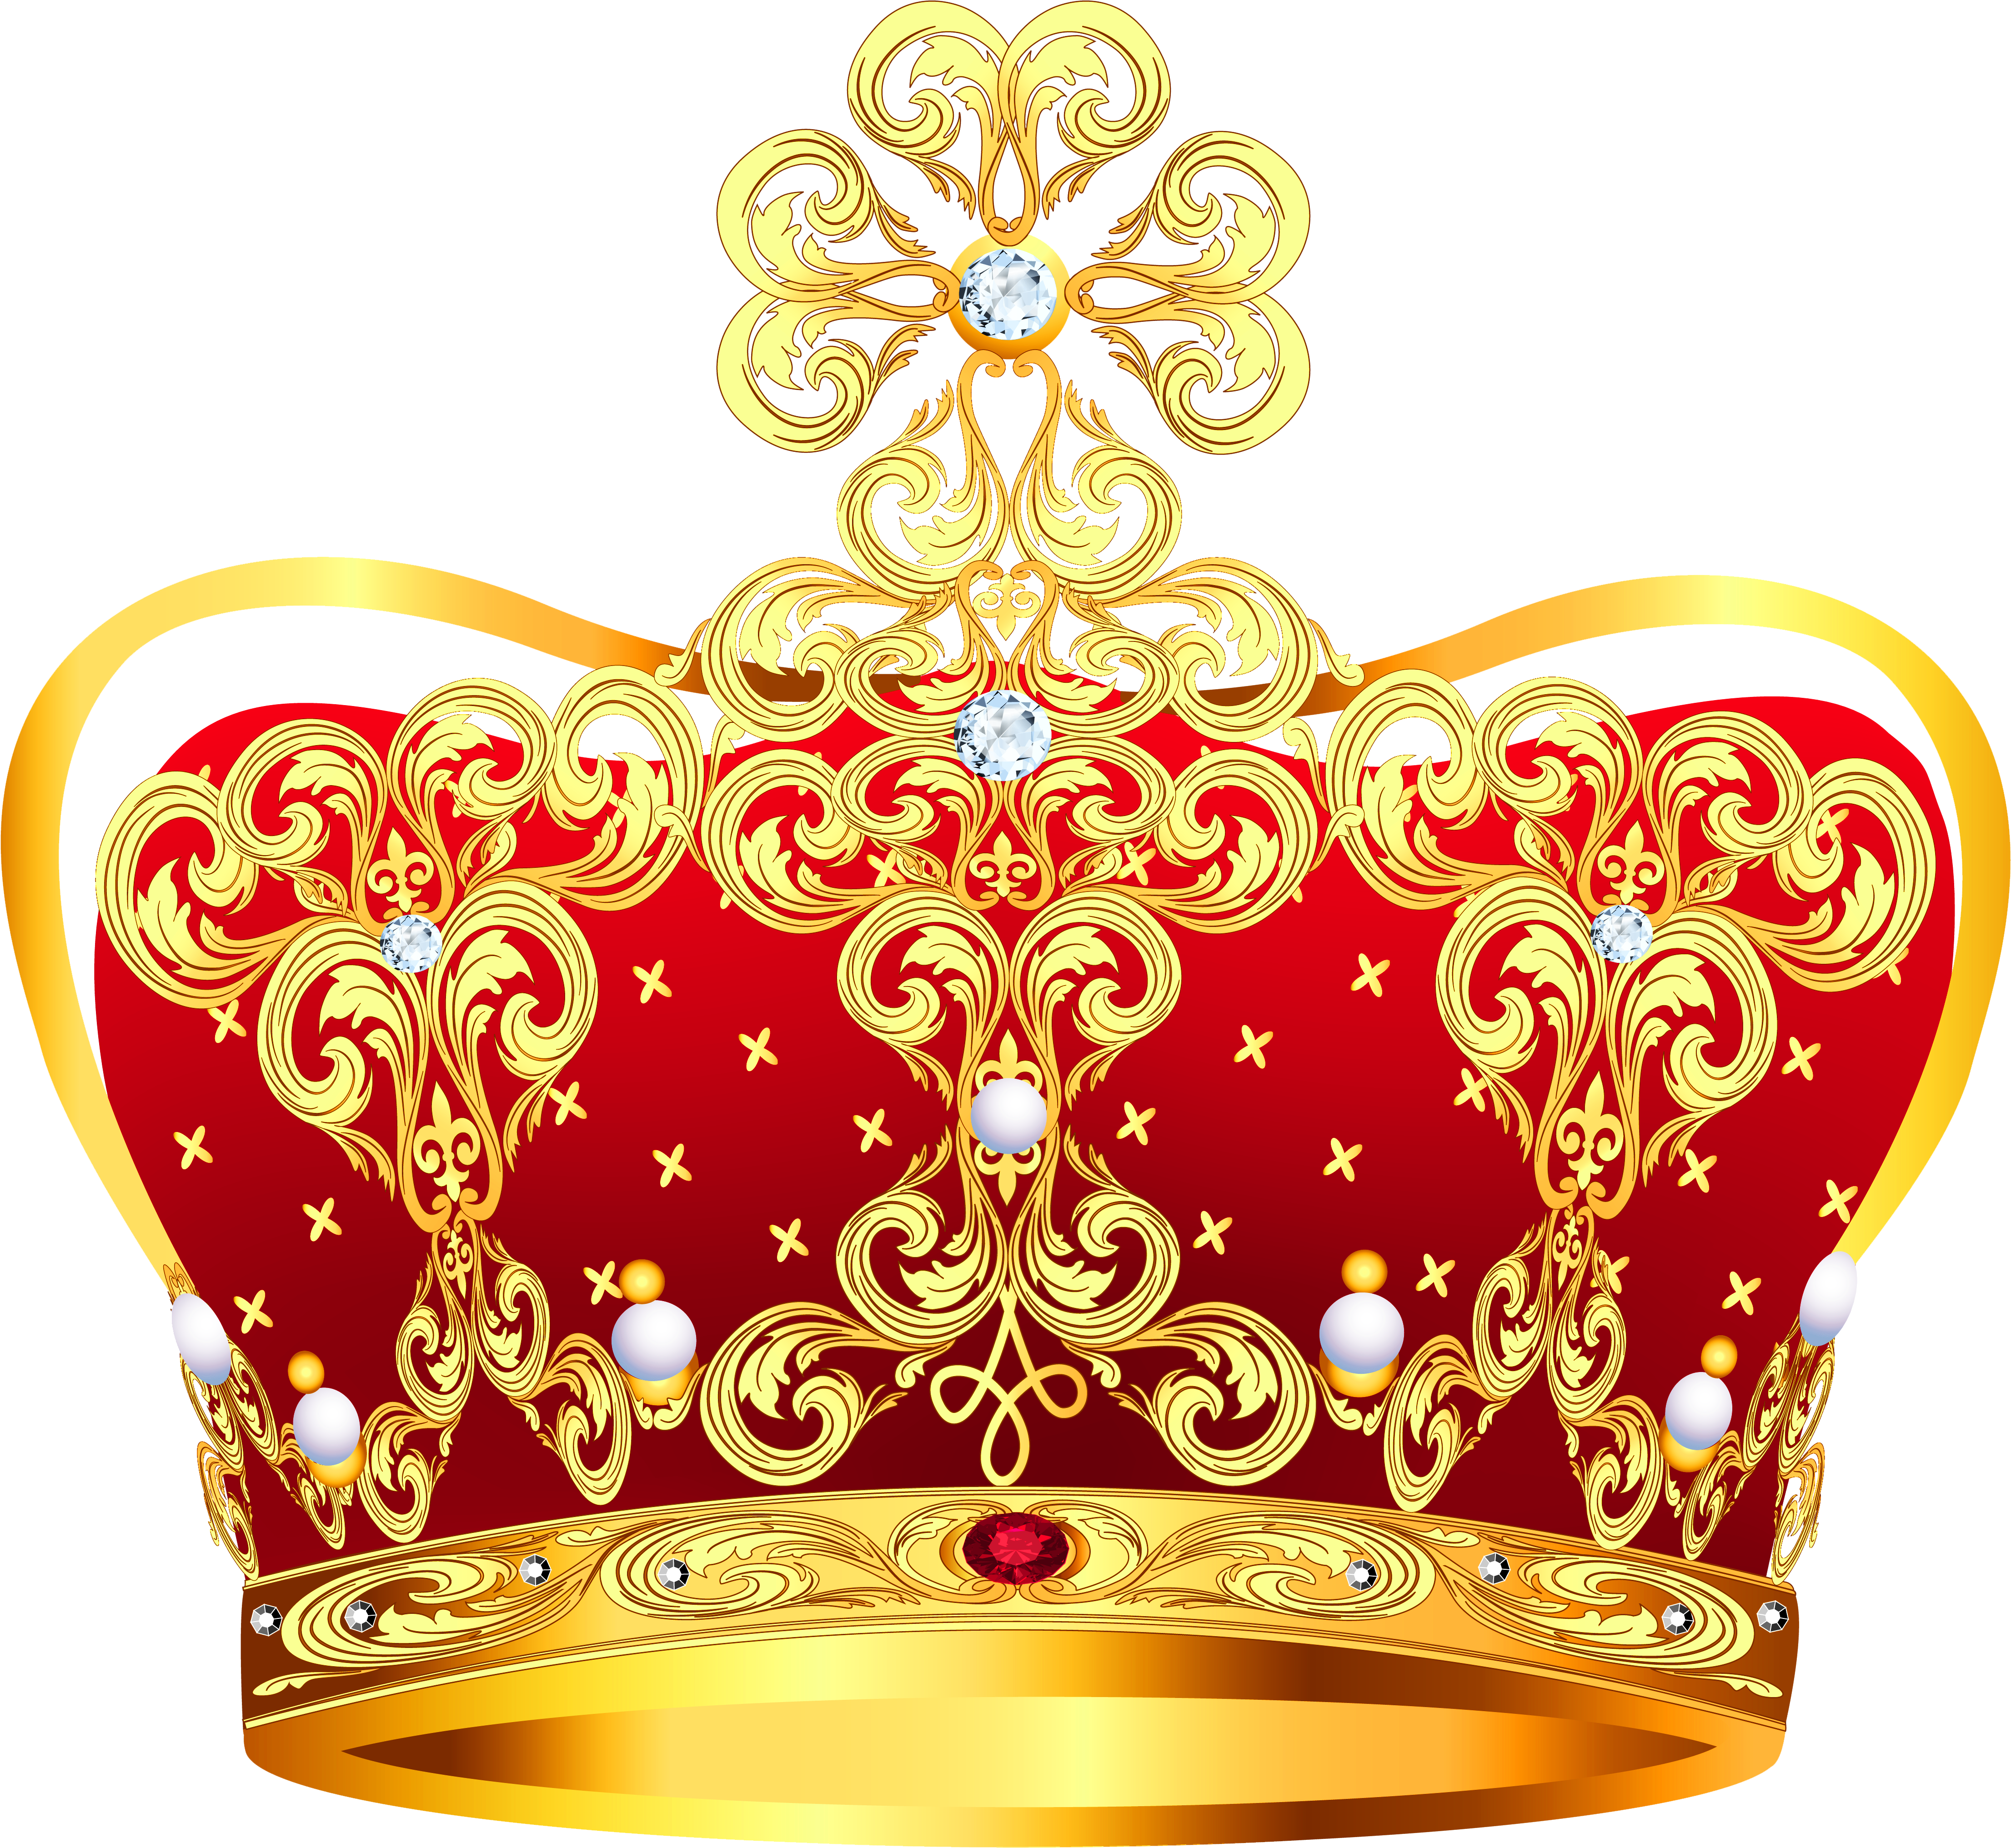 Download PNG image - Queen Crown Golden PNG Image 